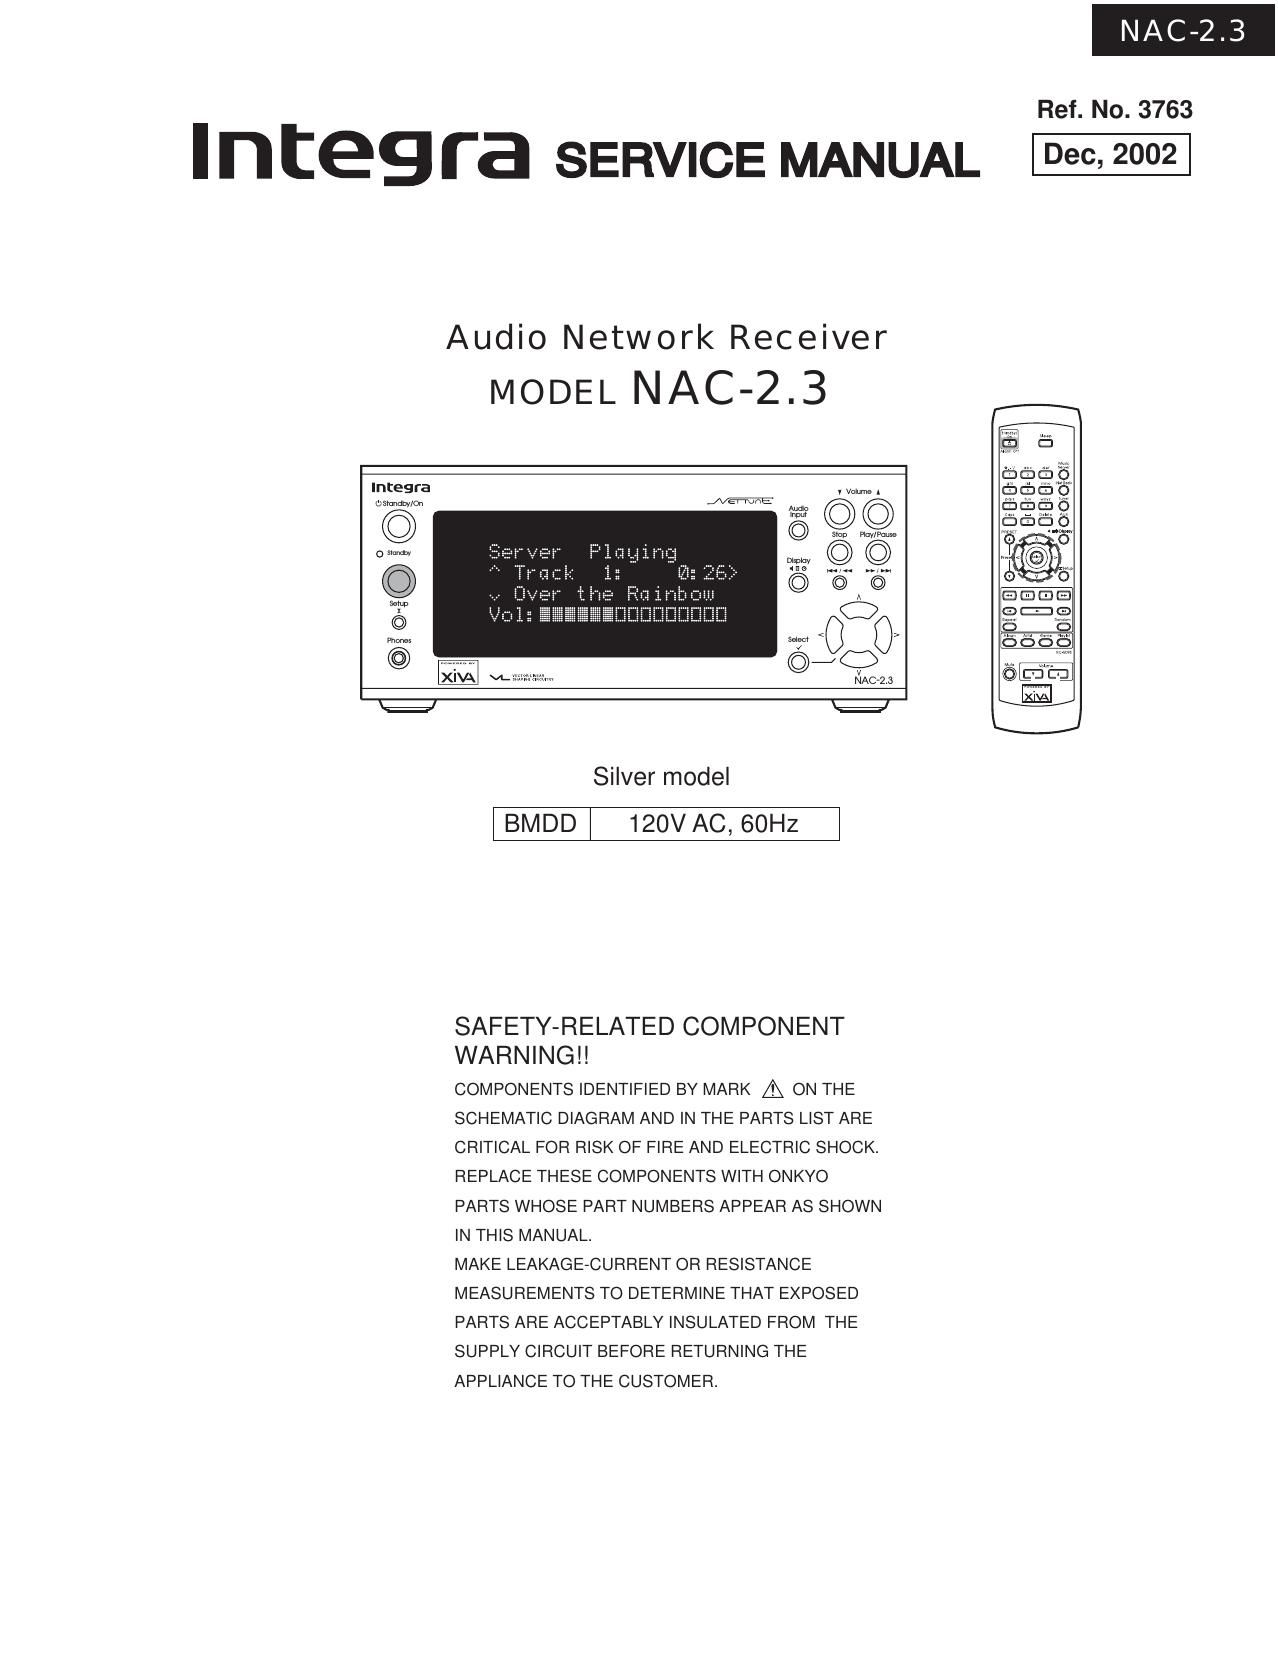 Onkyo NAC 2.3 Service Manual